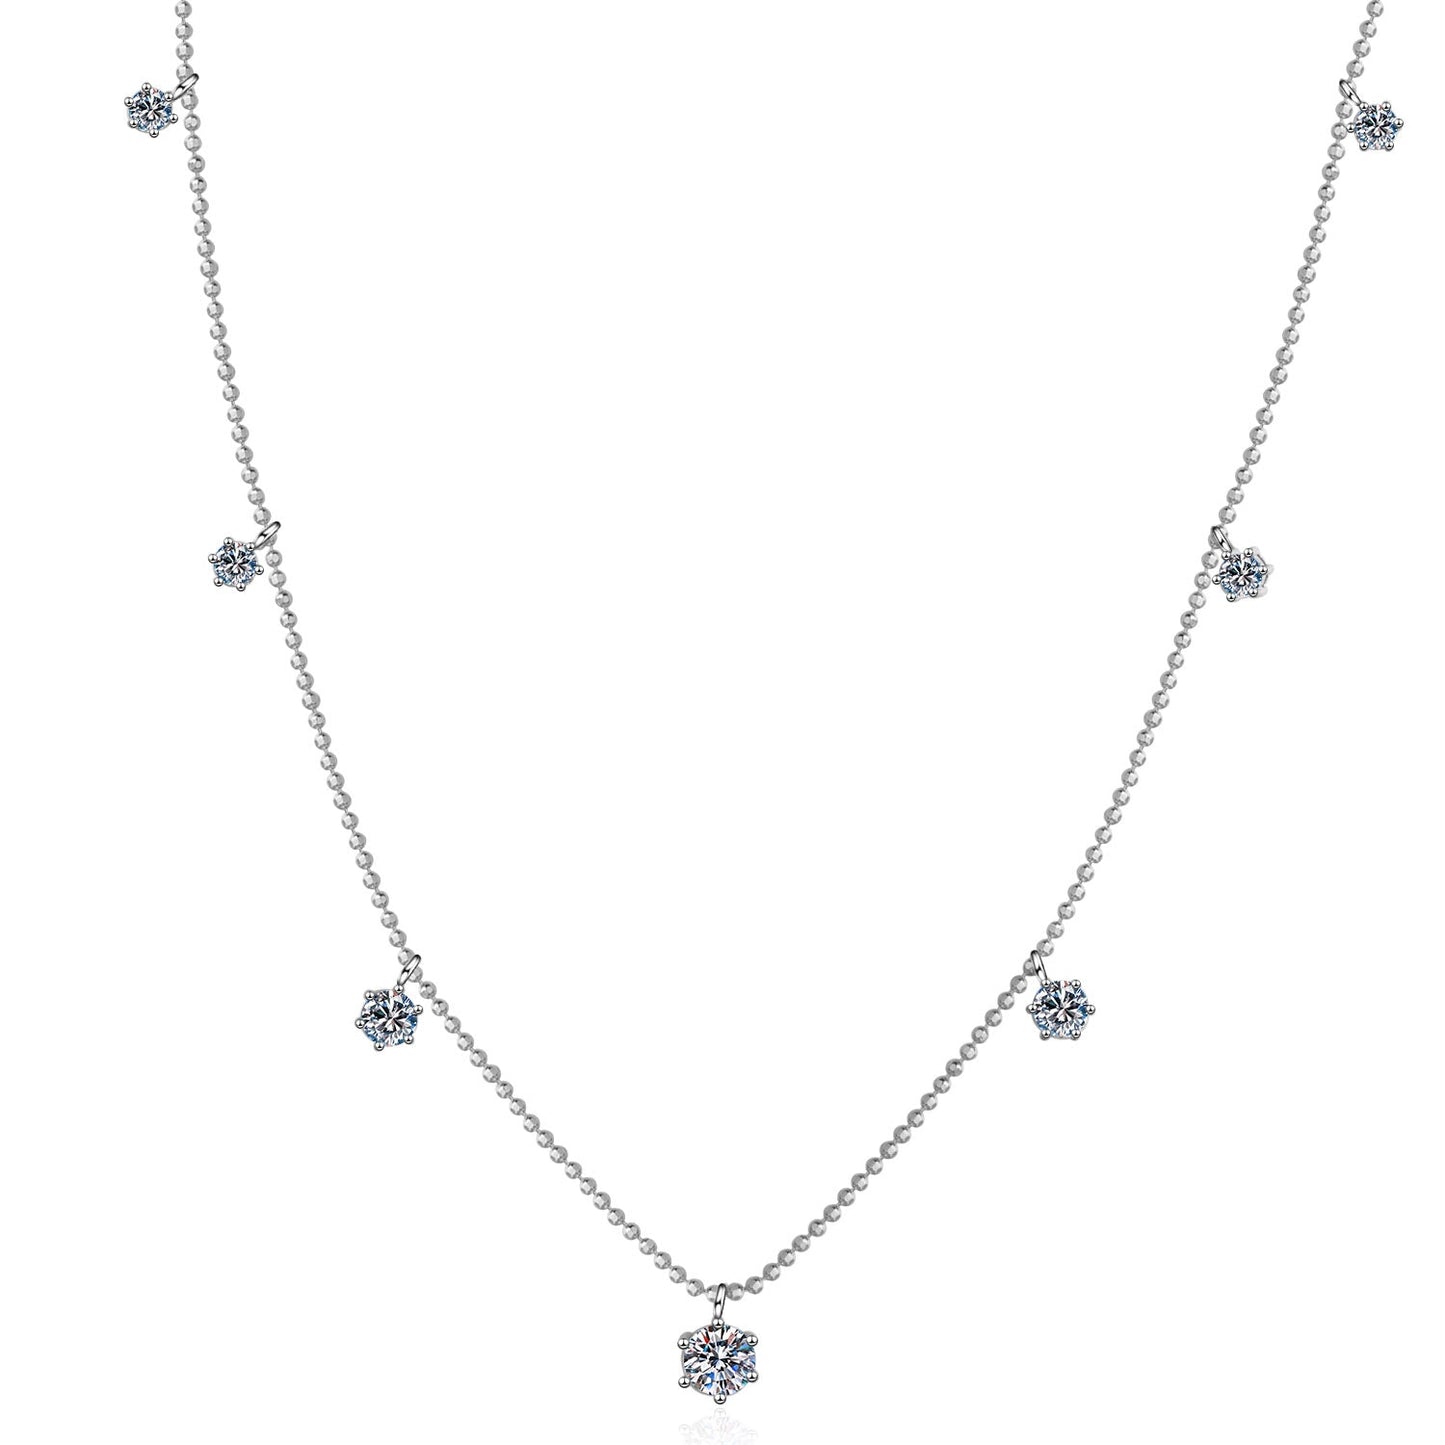 3.2 CT MOISSANITE Diamond Necklace Moissanite Pendant, Solid 925 Sterling Silver Chain, Passes Diamond Tester Xaxe.com